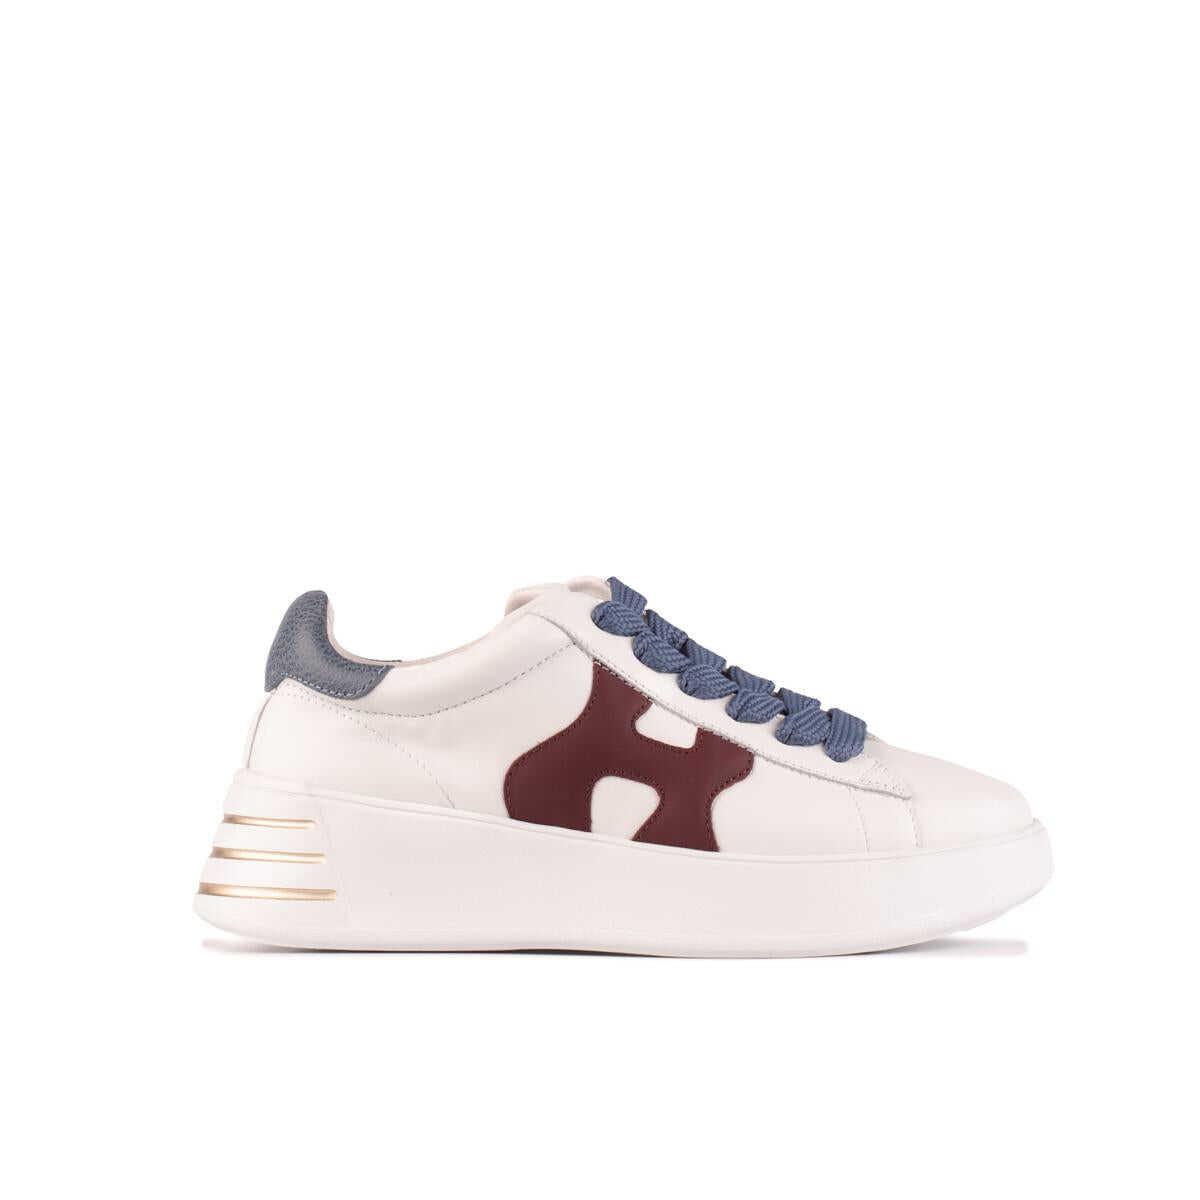 Hogan HOGAN Bordeaux white and light blue rebel sneakers WHITE